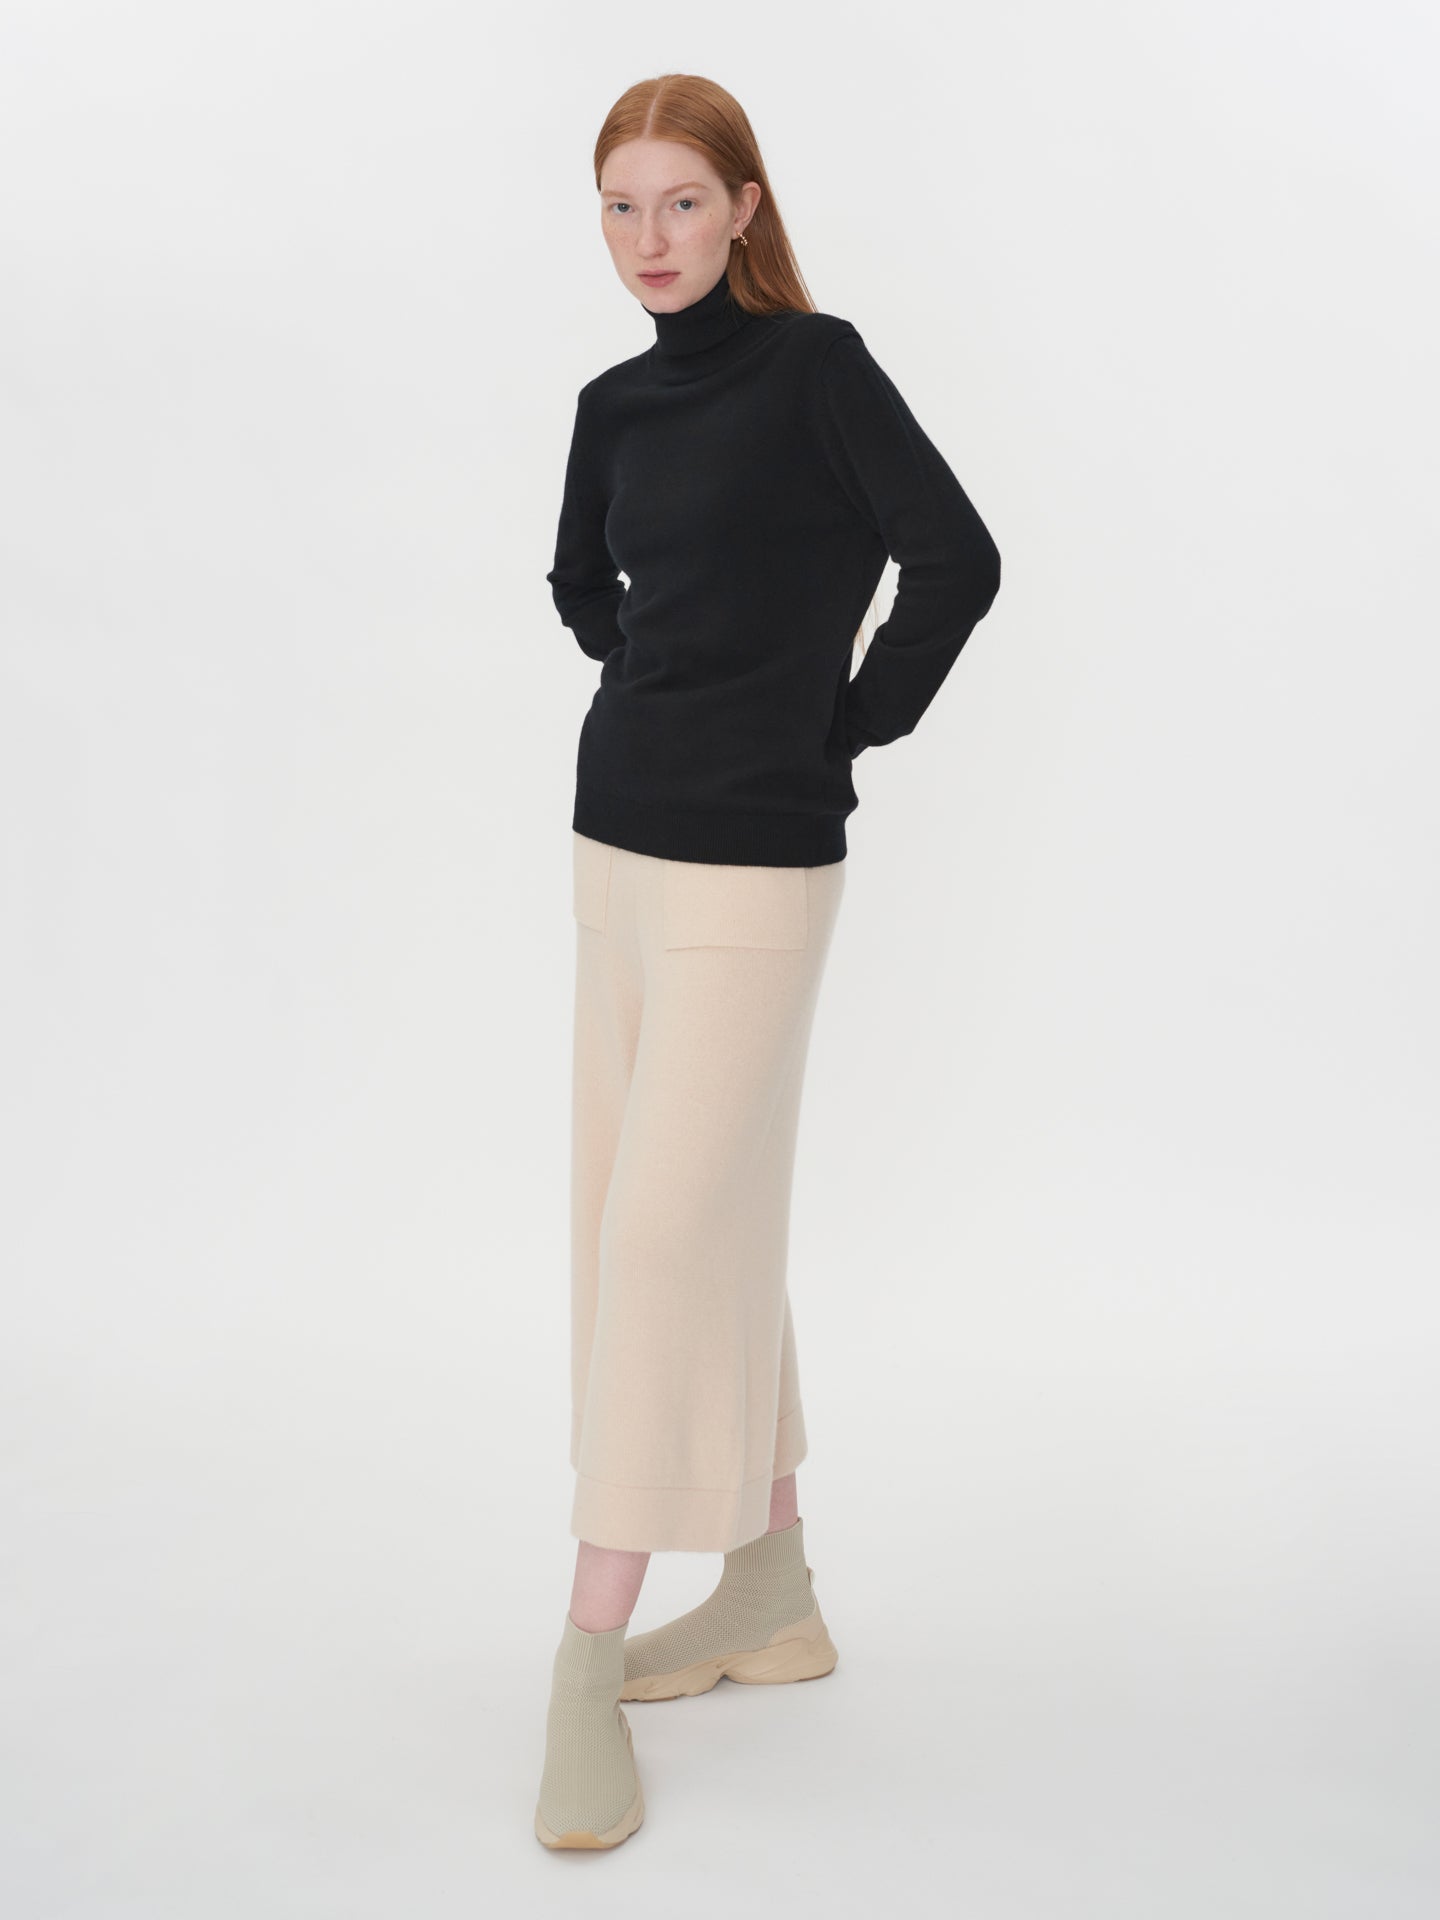 Women's Cashmere Classic Turtle Neck Sweater Black - Gobi Cashmere